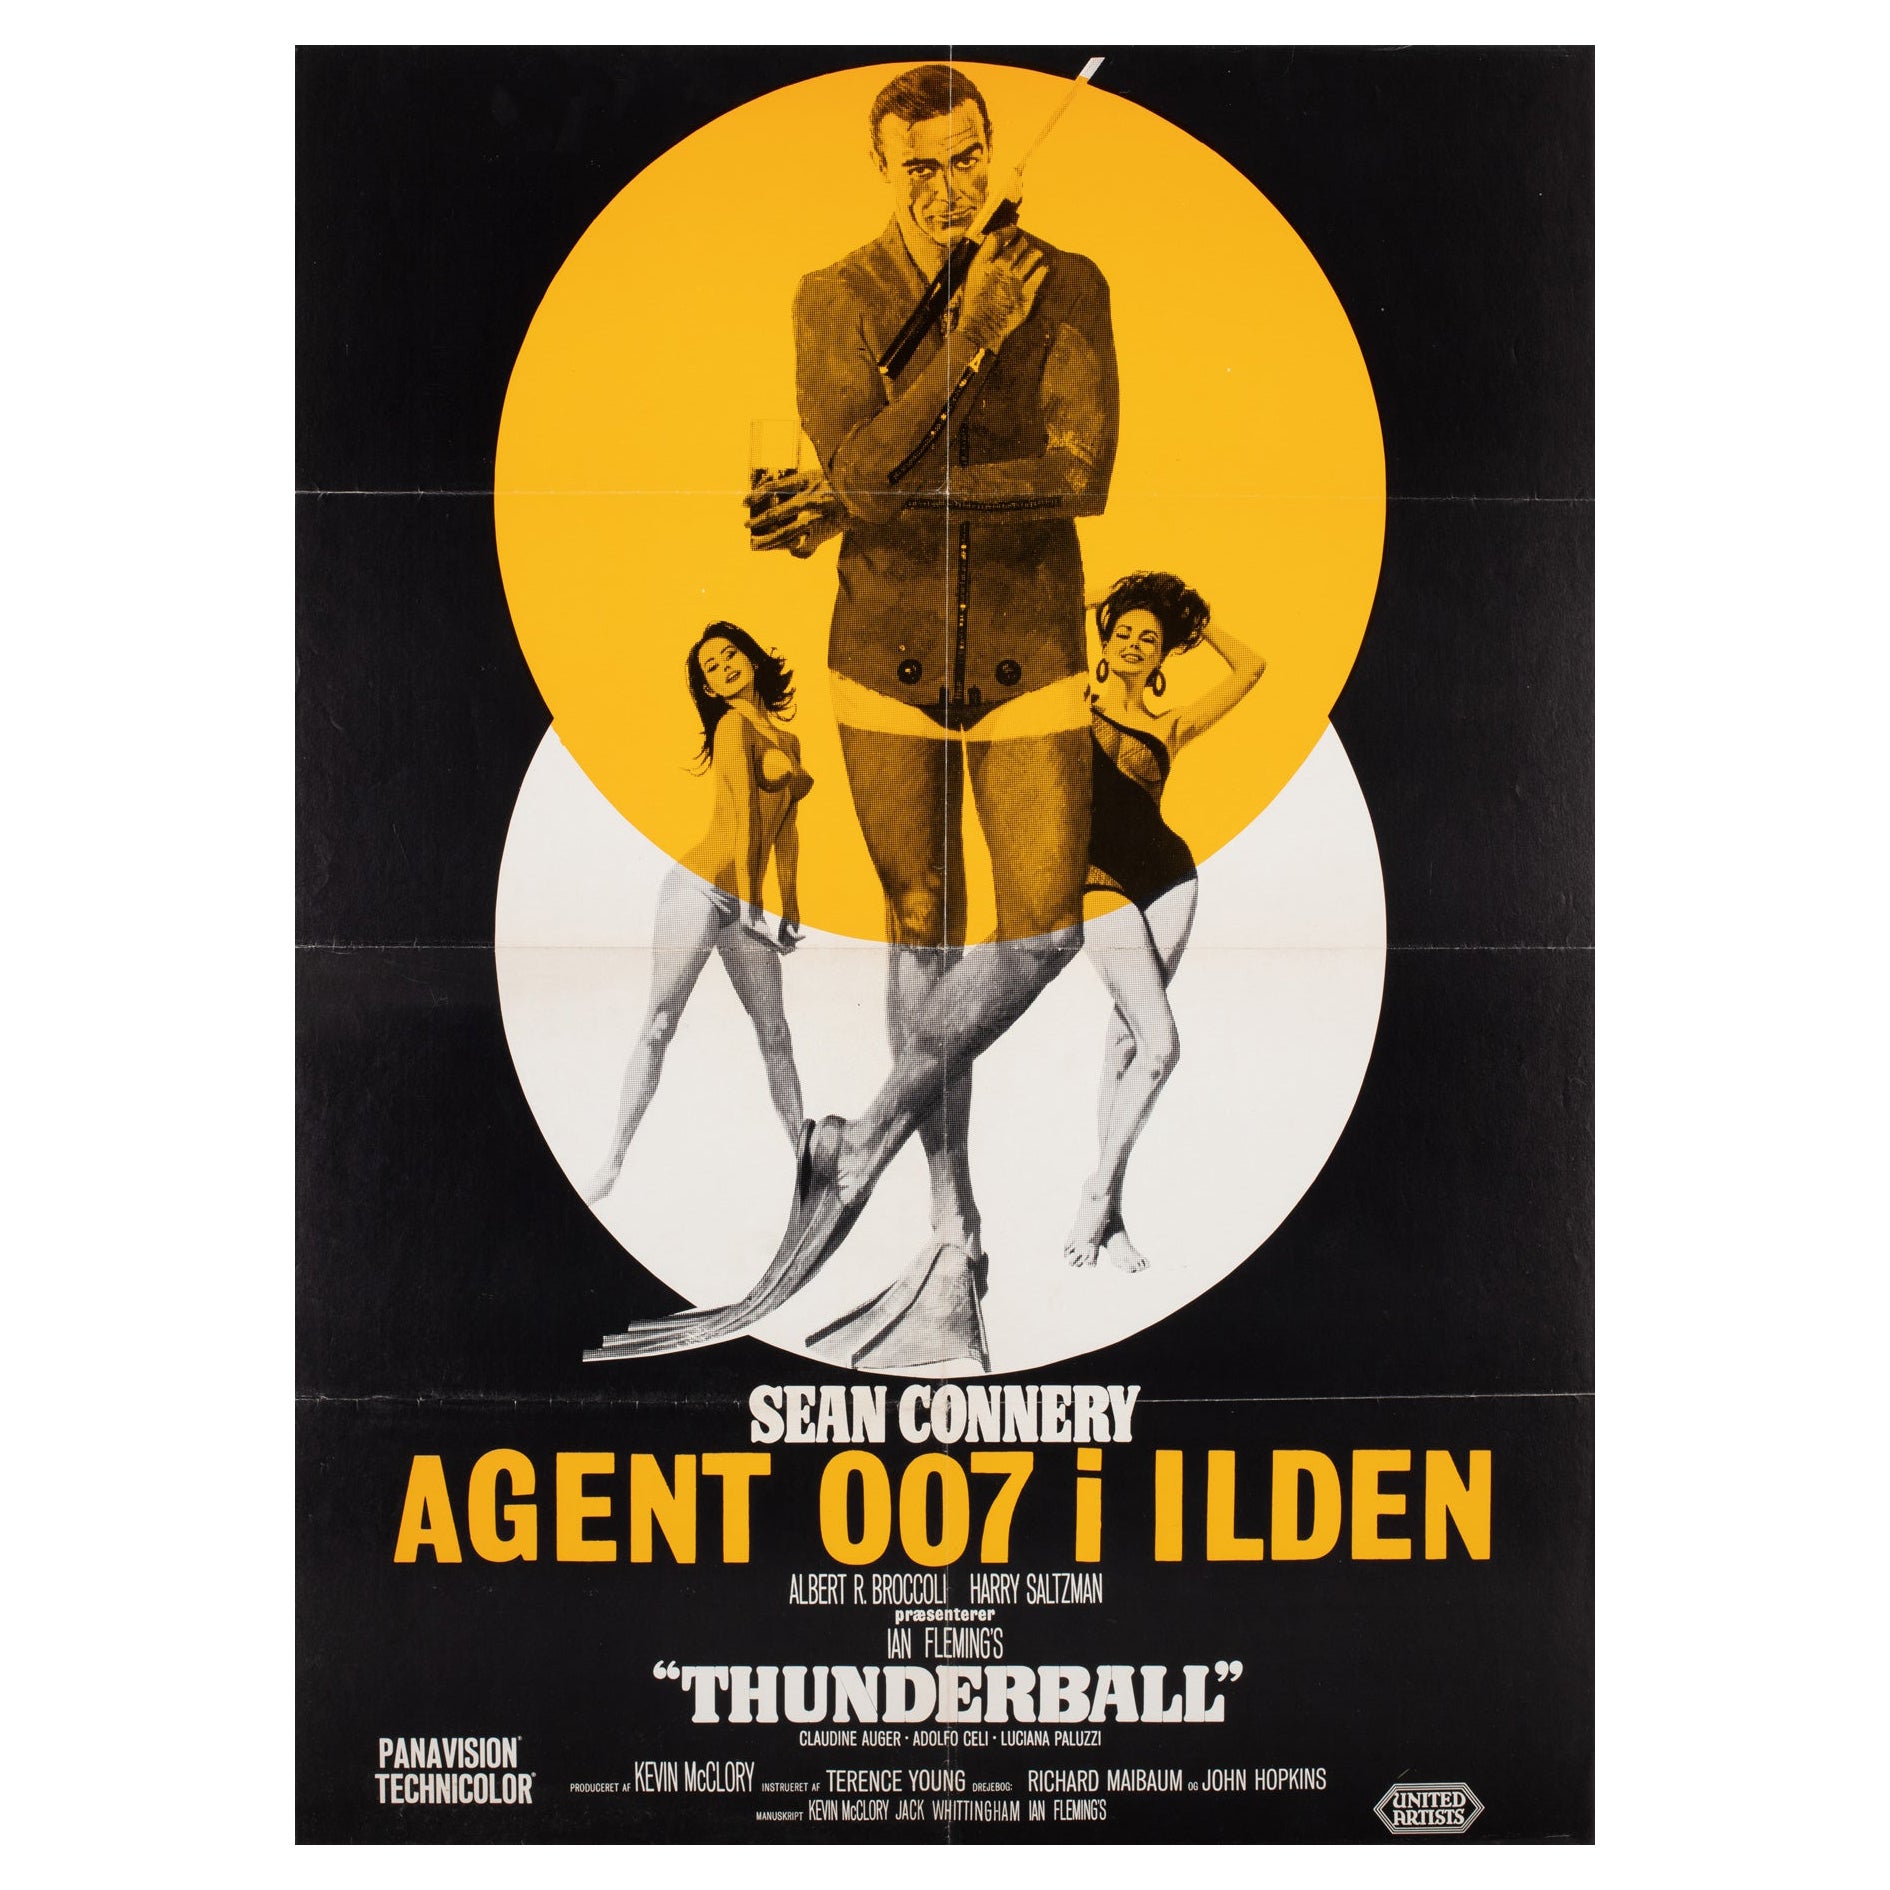 Affiche A1 danoise du film Thunderball R1972, Robert McGinnis